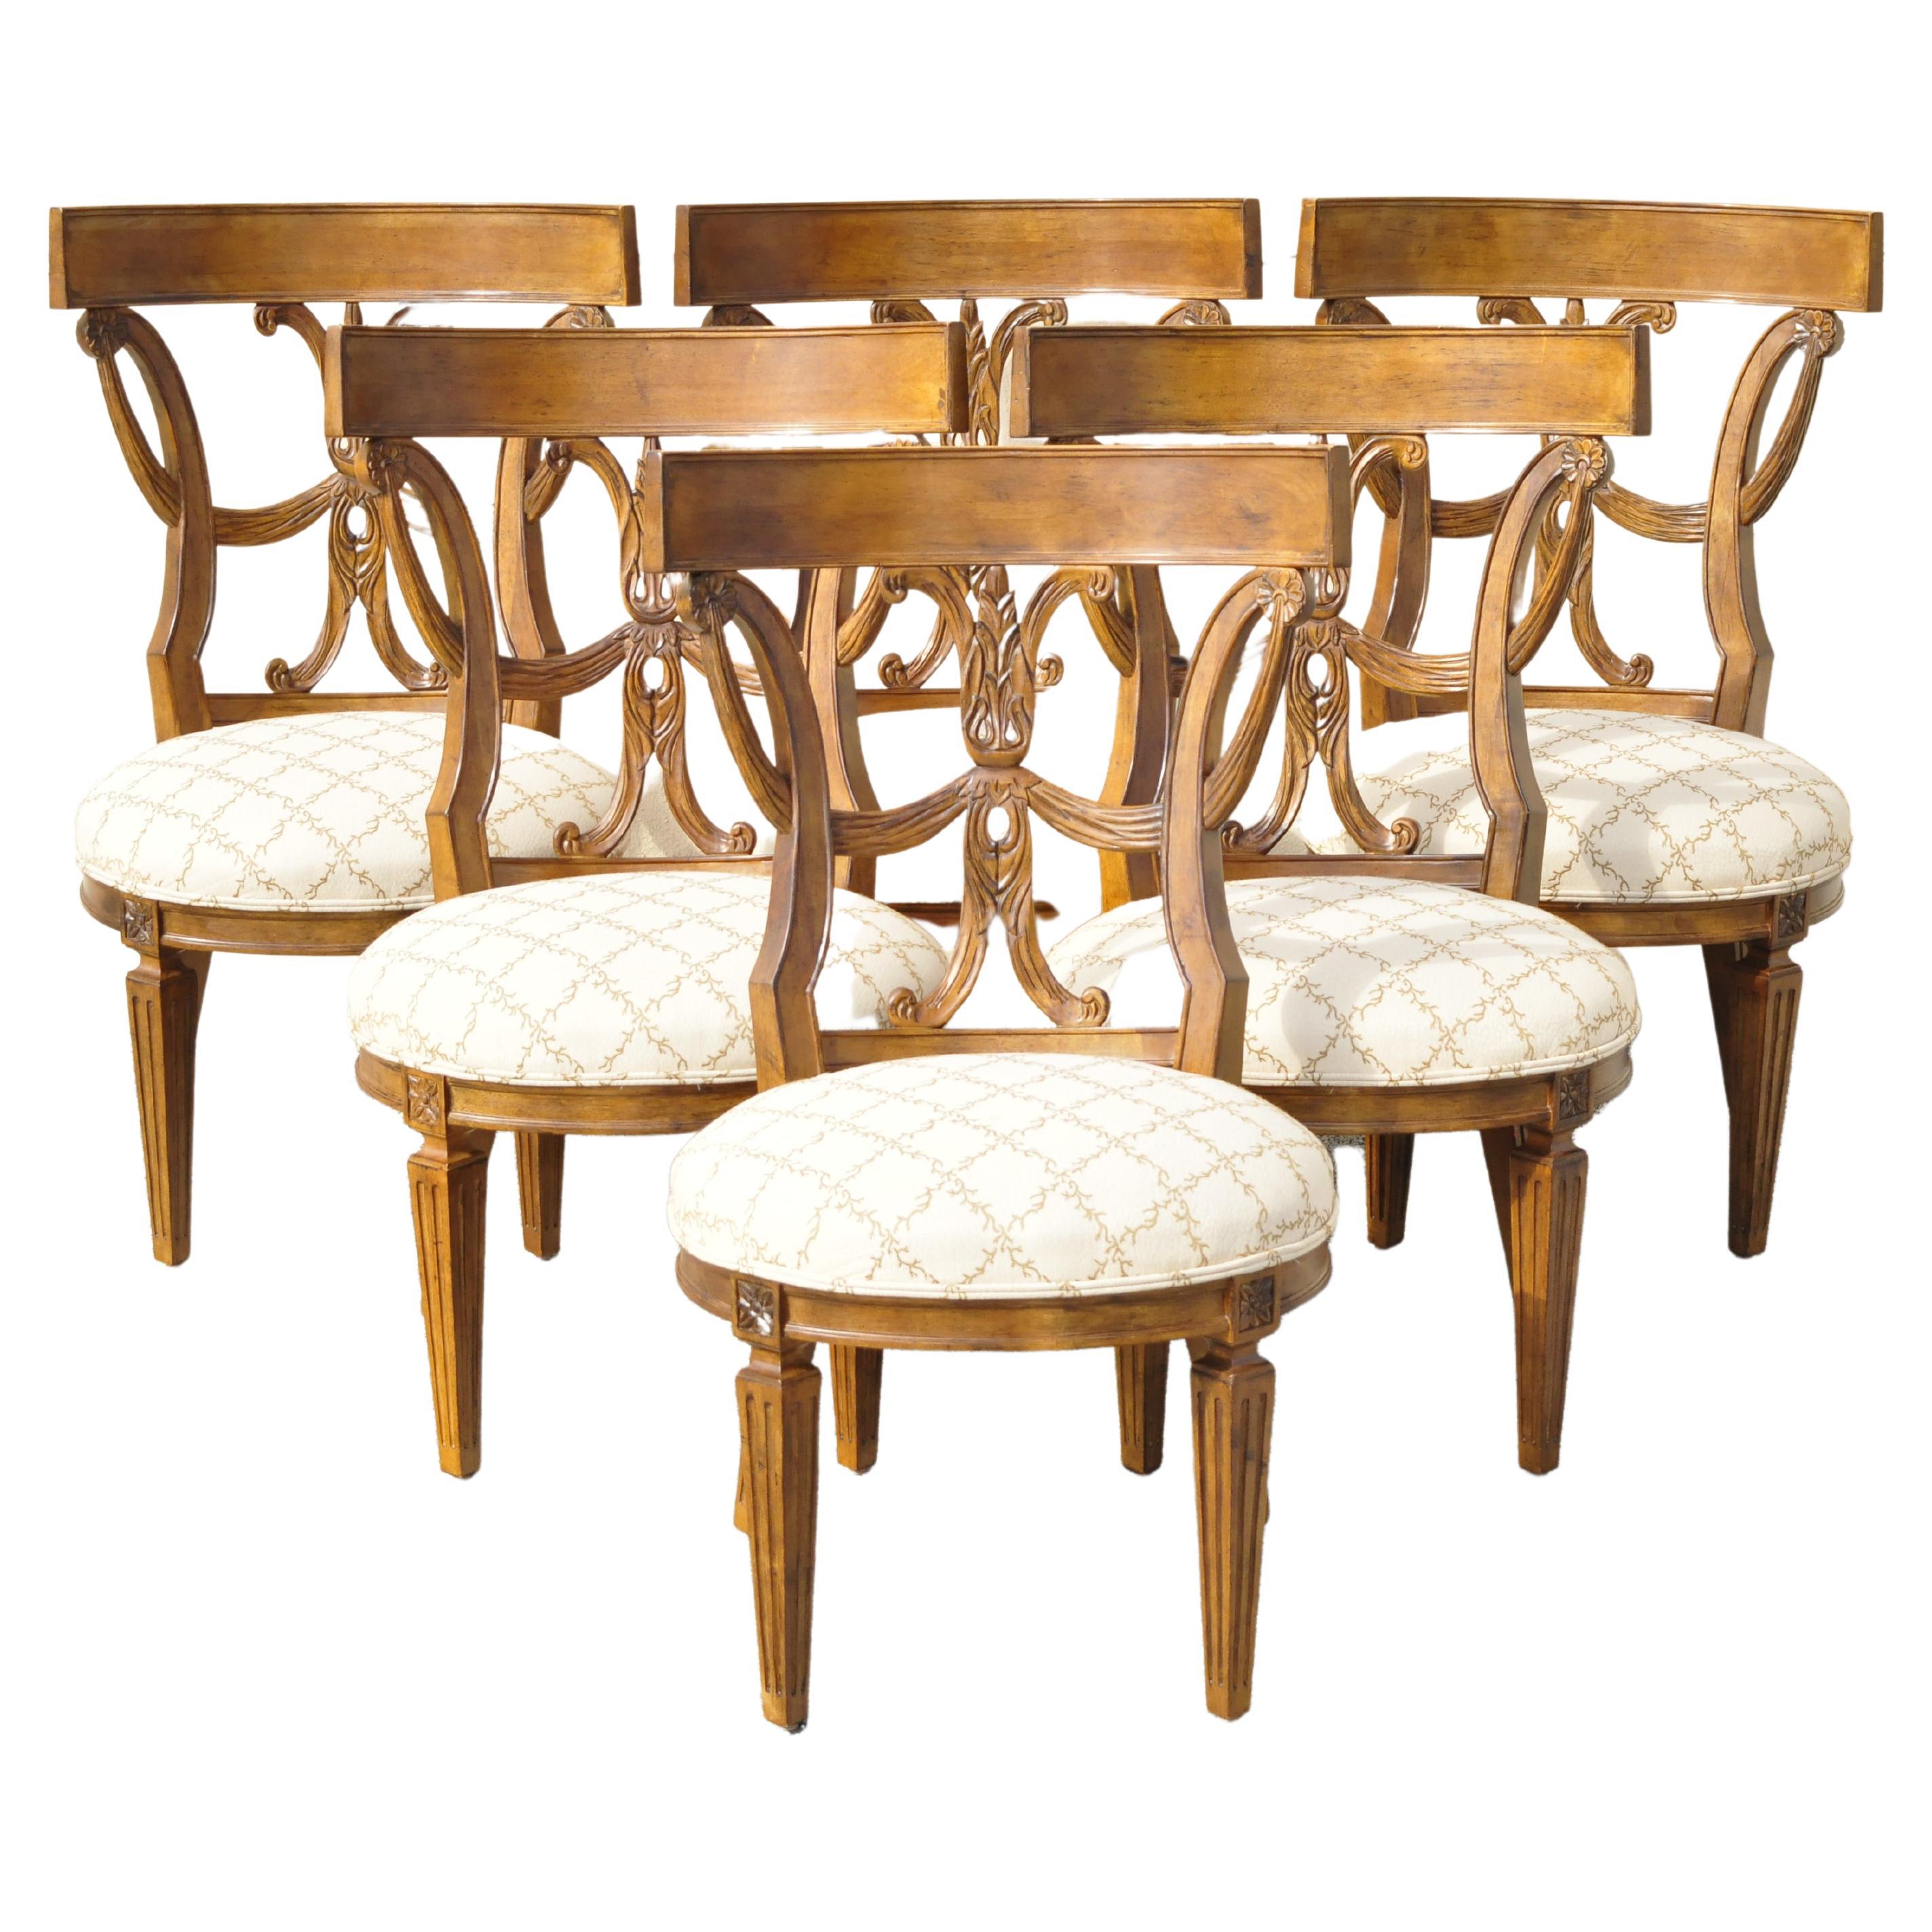 Century Furniture Italian Mediterranean Wood Dining Chairs 621-521, Set of 6